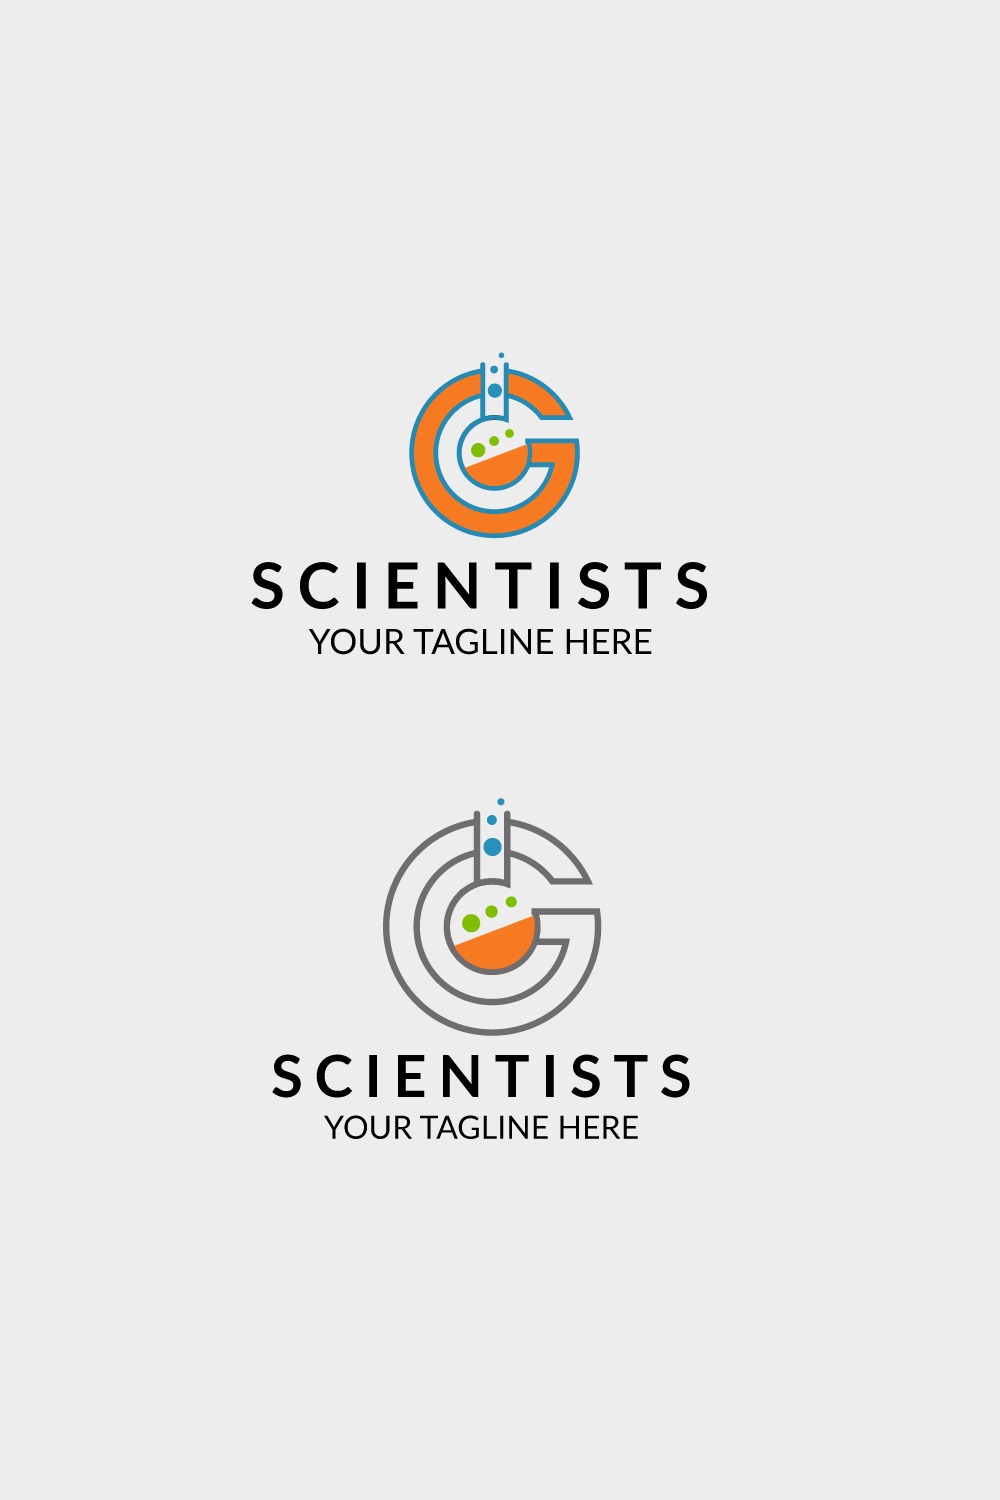 G scientists logo design pinterest preview image.